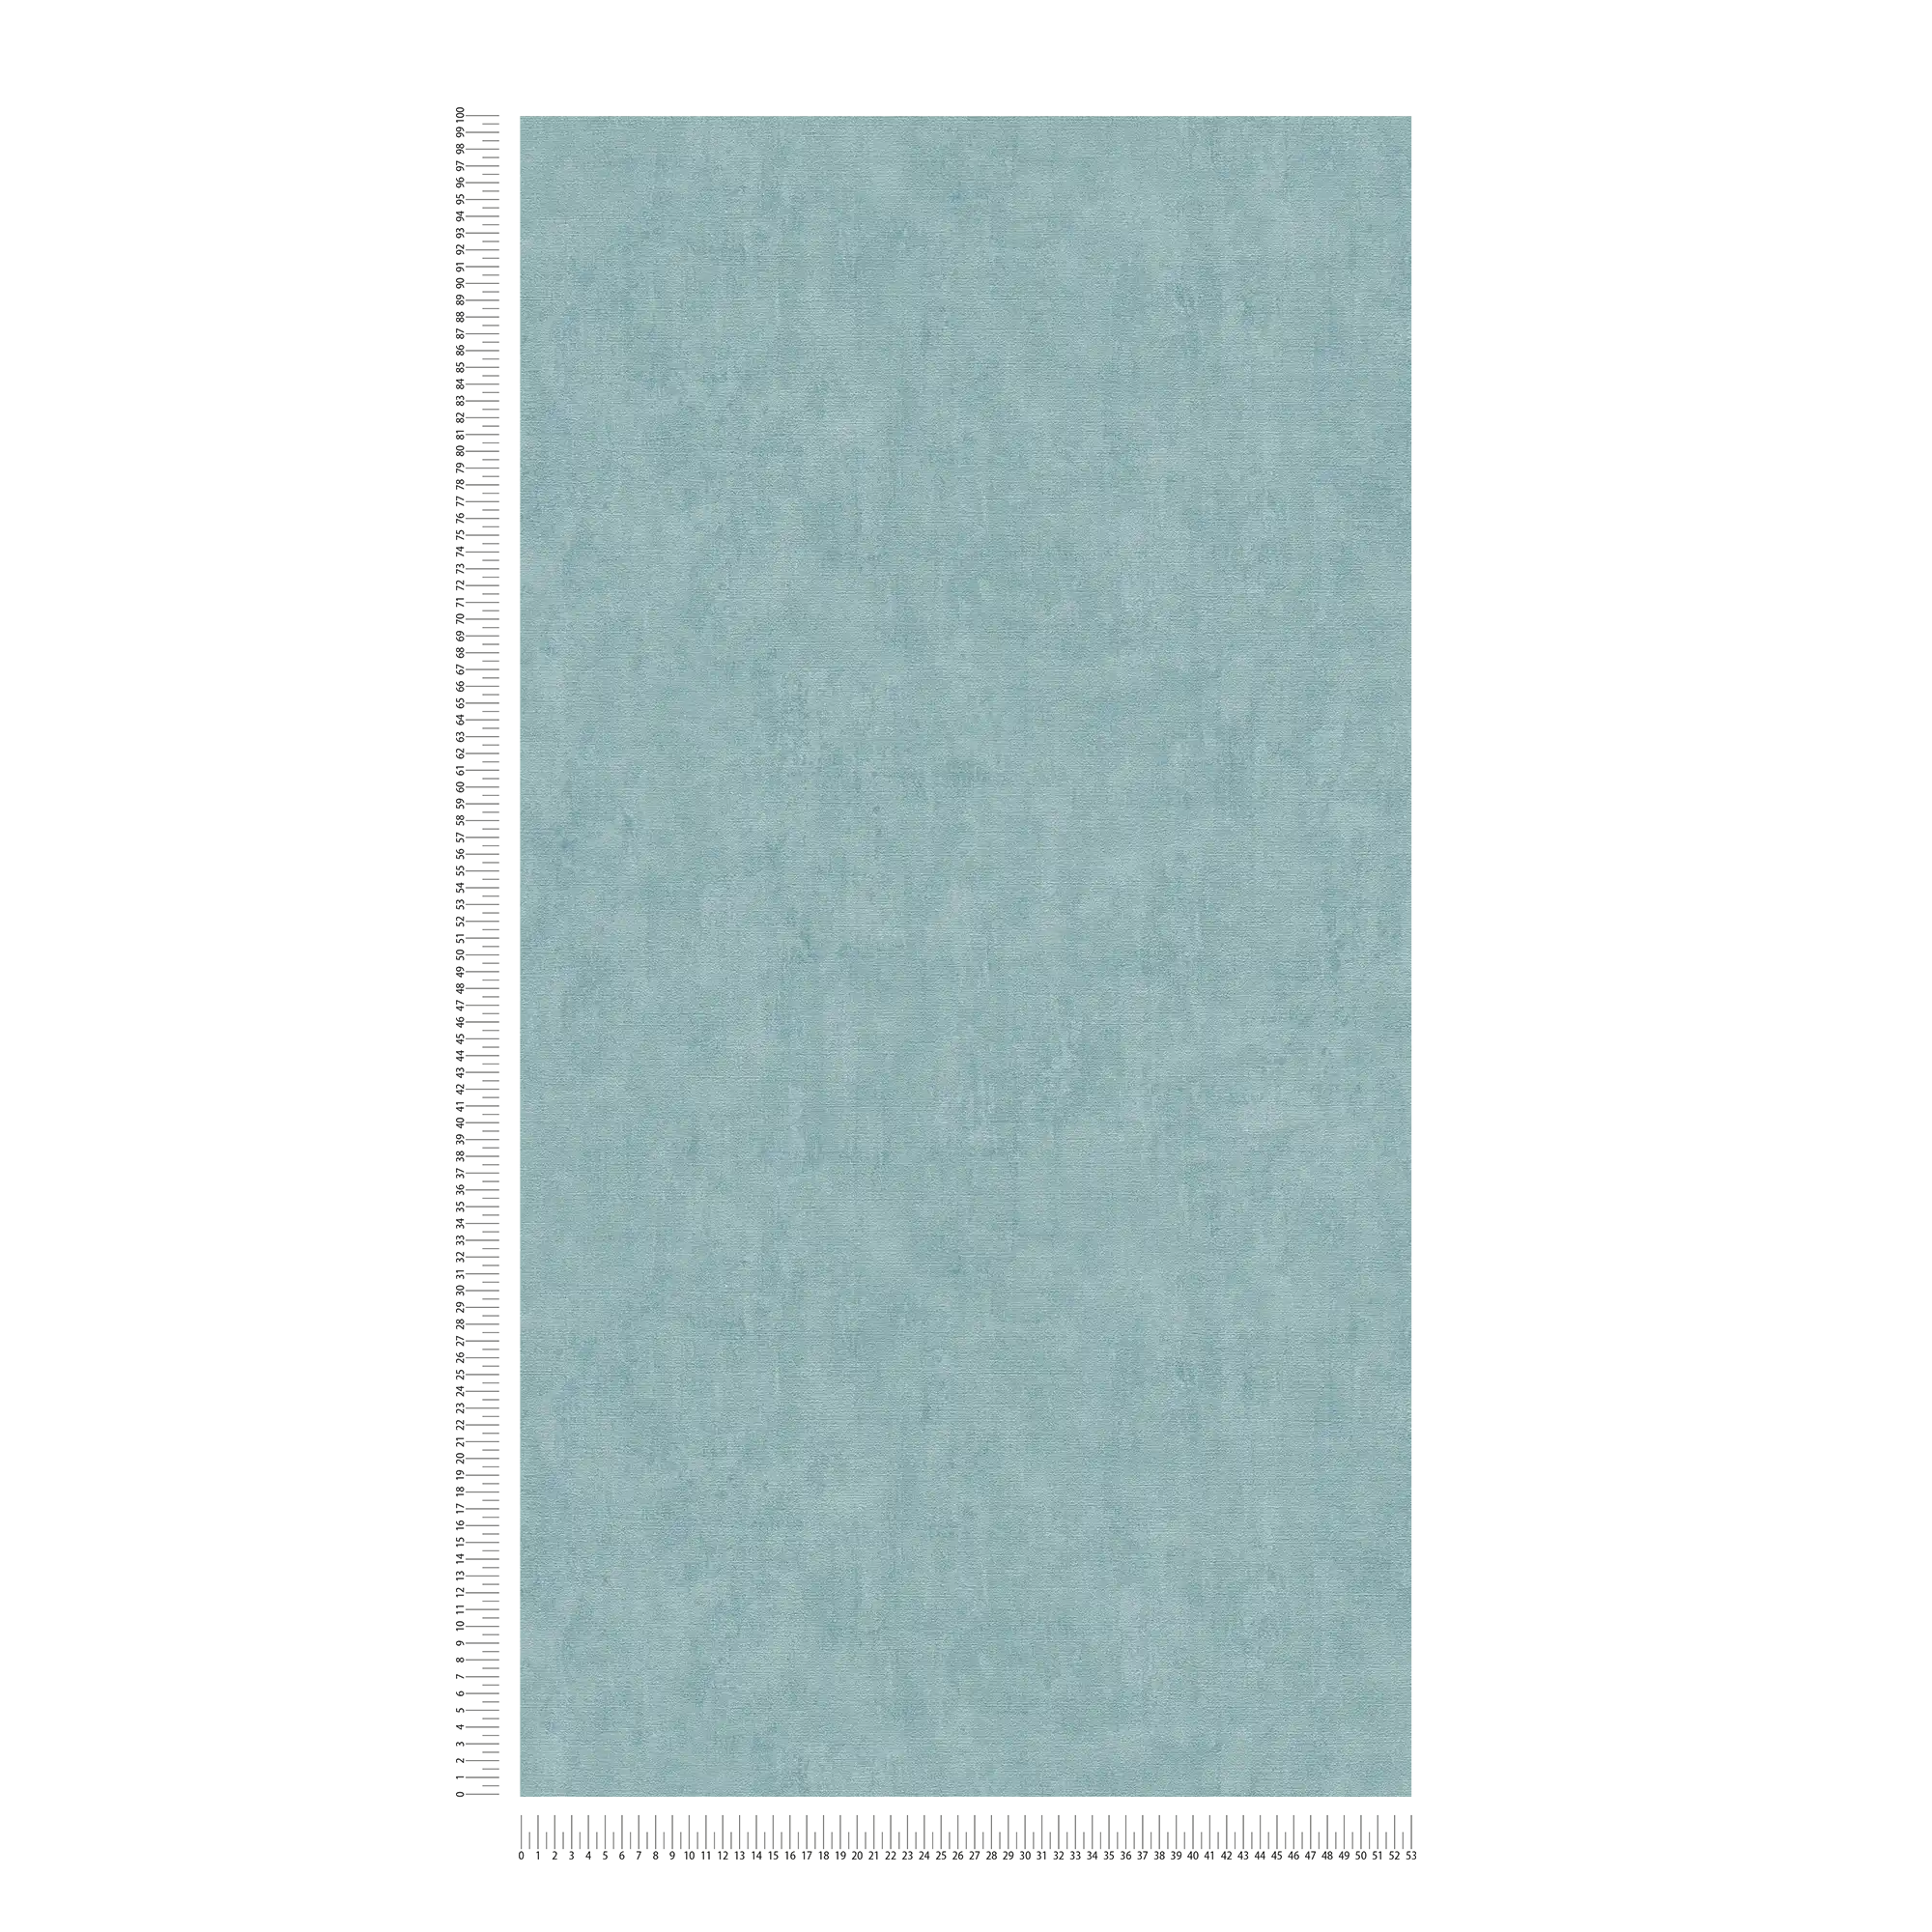             papel pintado de color azul claro sombreado en aspecto vintage - azul
        